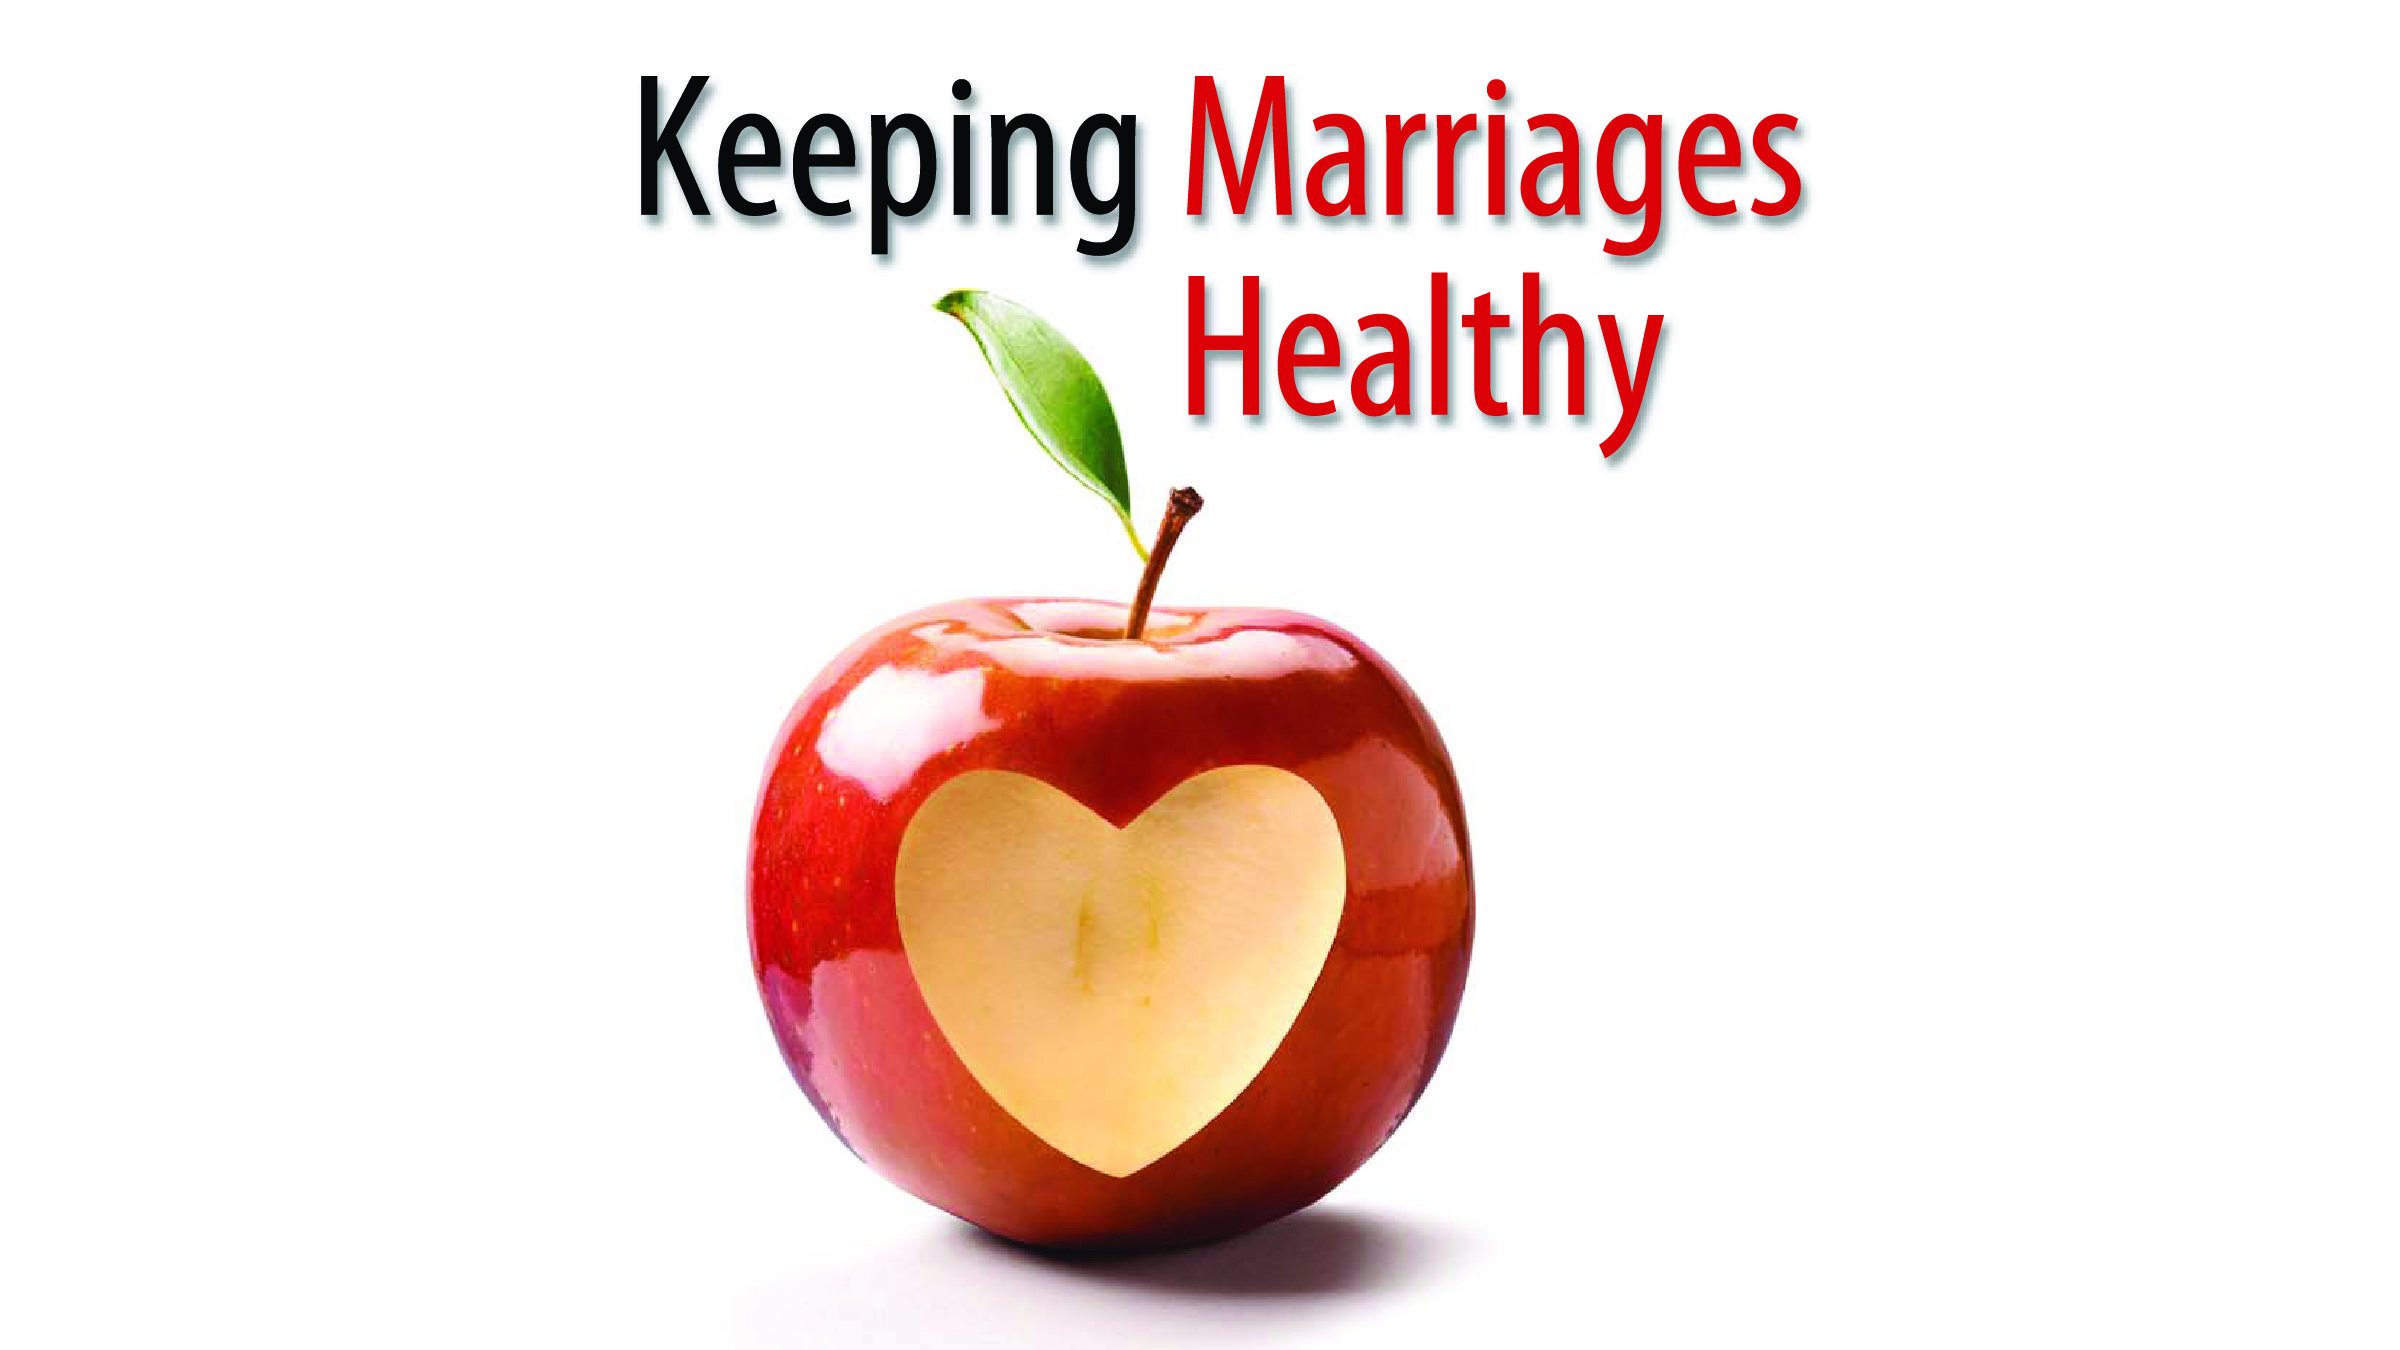 Keeping Marriages Healthy Workshop - Tulsa, OK